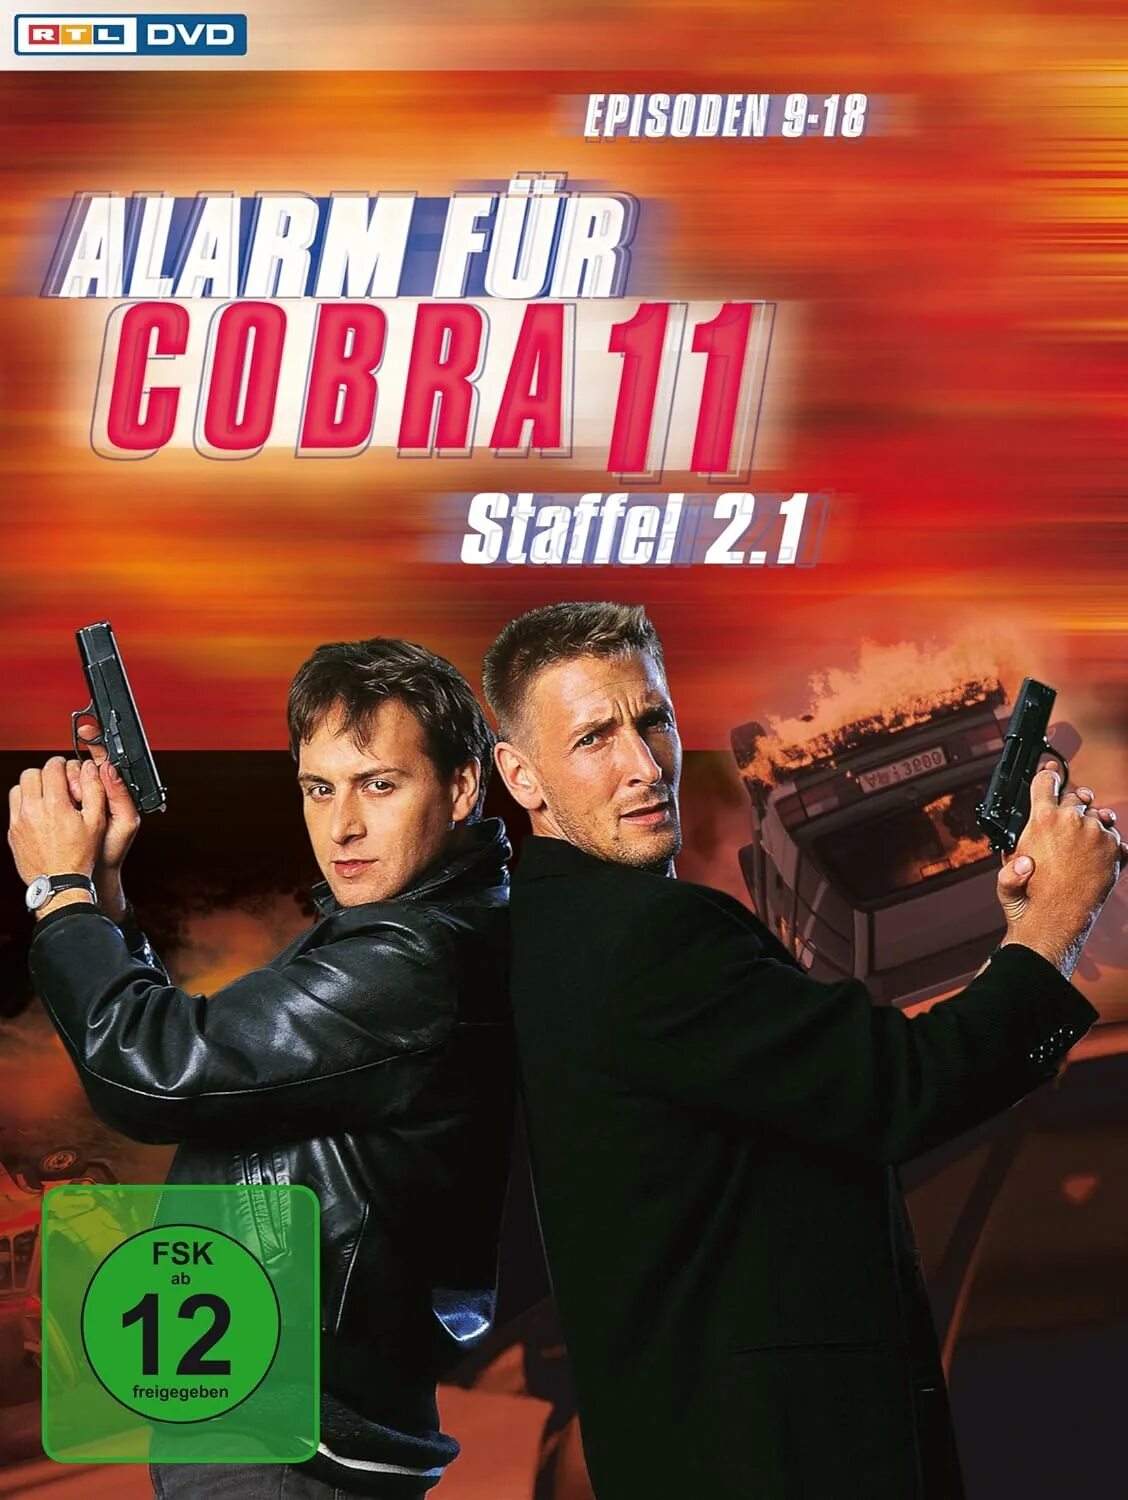 Cobra 11 DVD 14. Alarm for Cobra 11. Alarm for cobra